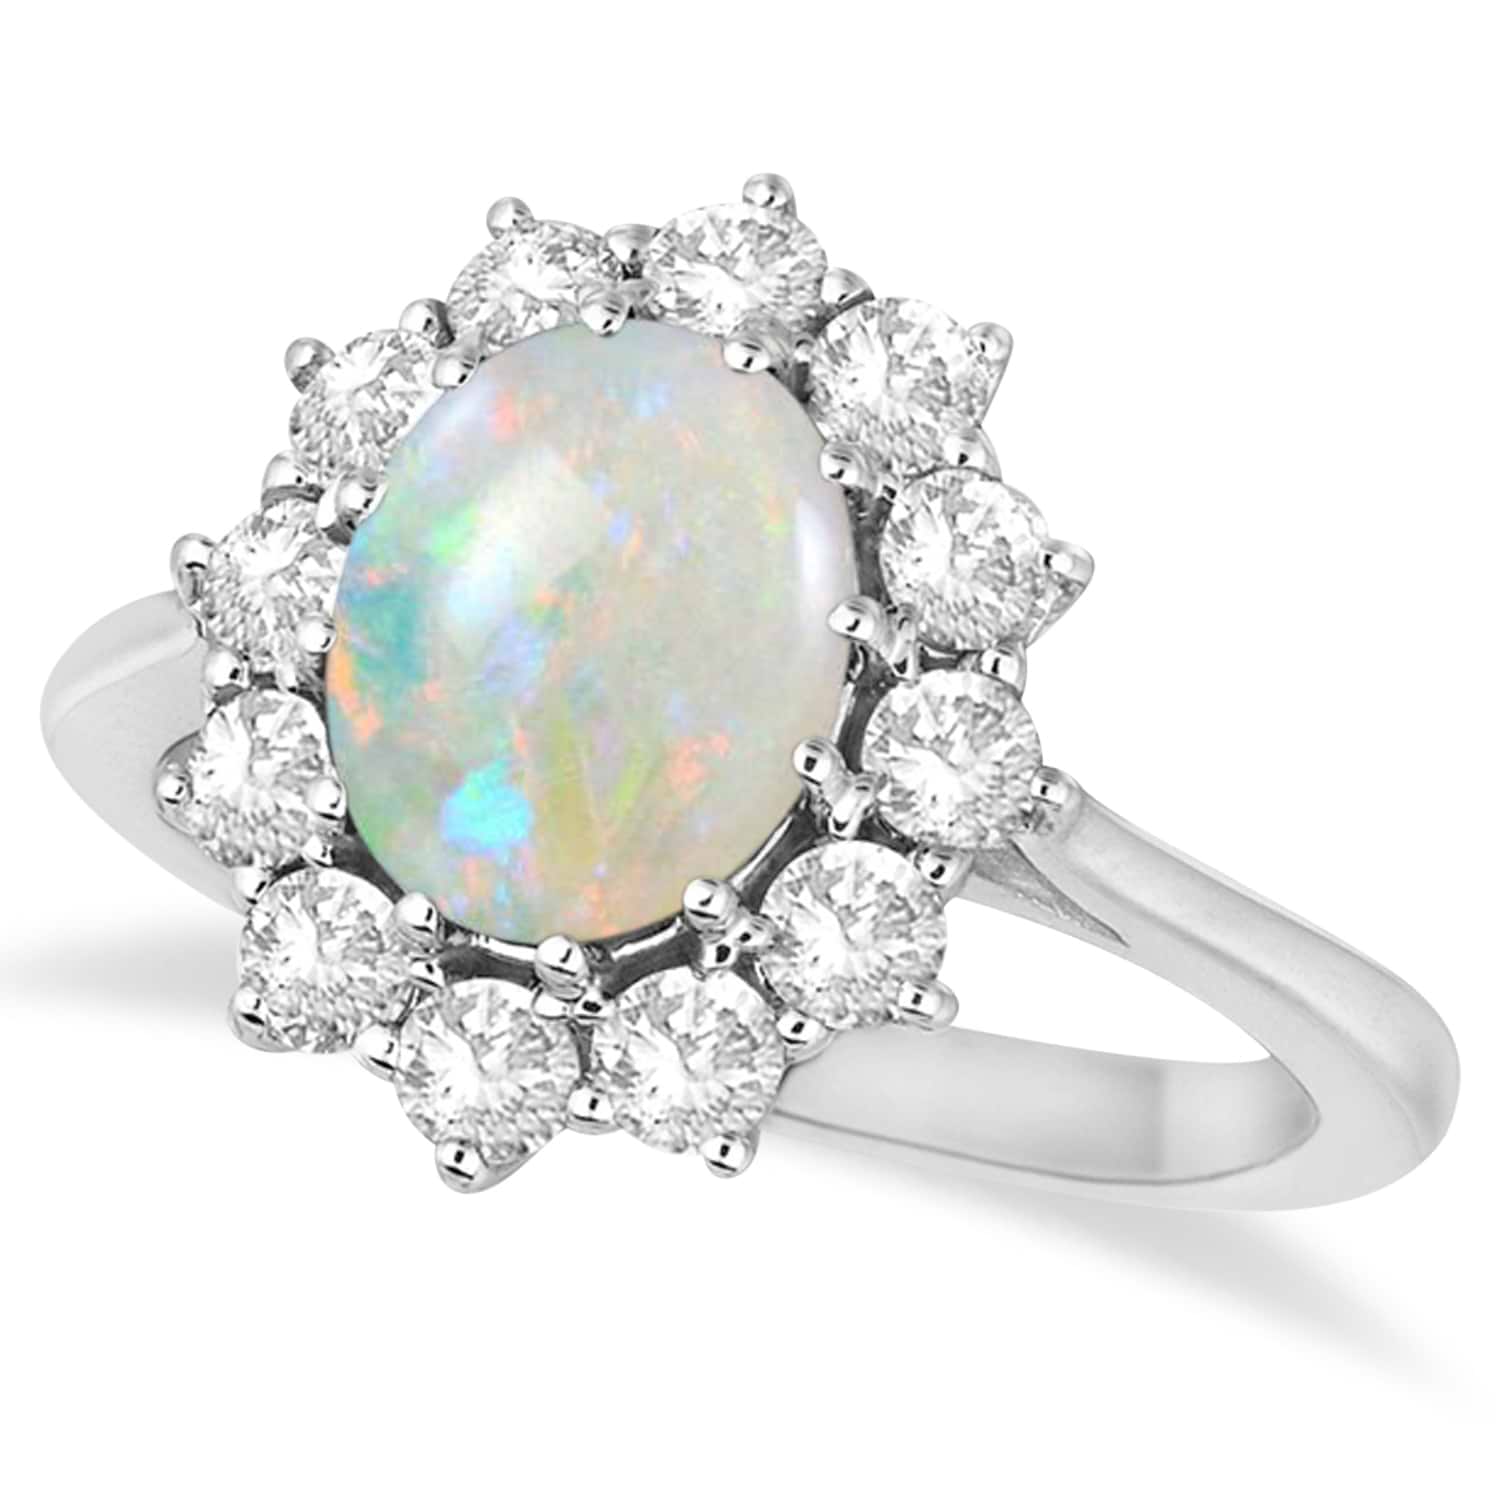 Oval Blue Sapphire & Diamond Pendant Necklace 14K White Gold (3.60ctw)